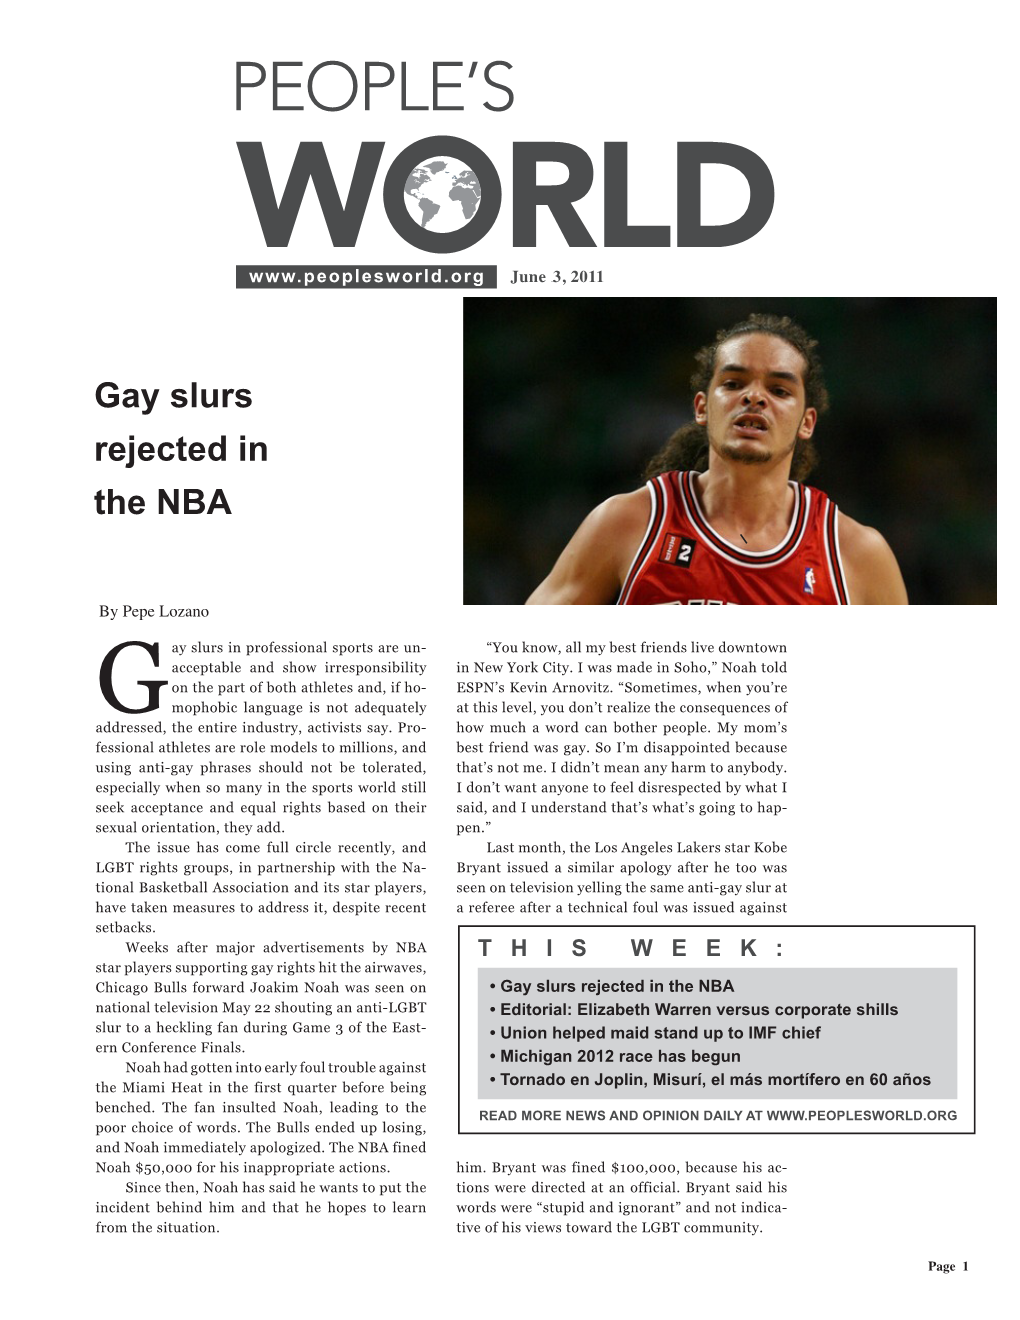 Gay Slurs Rejected in the NBA